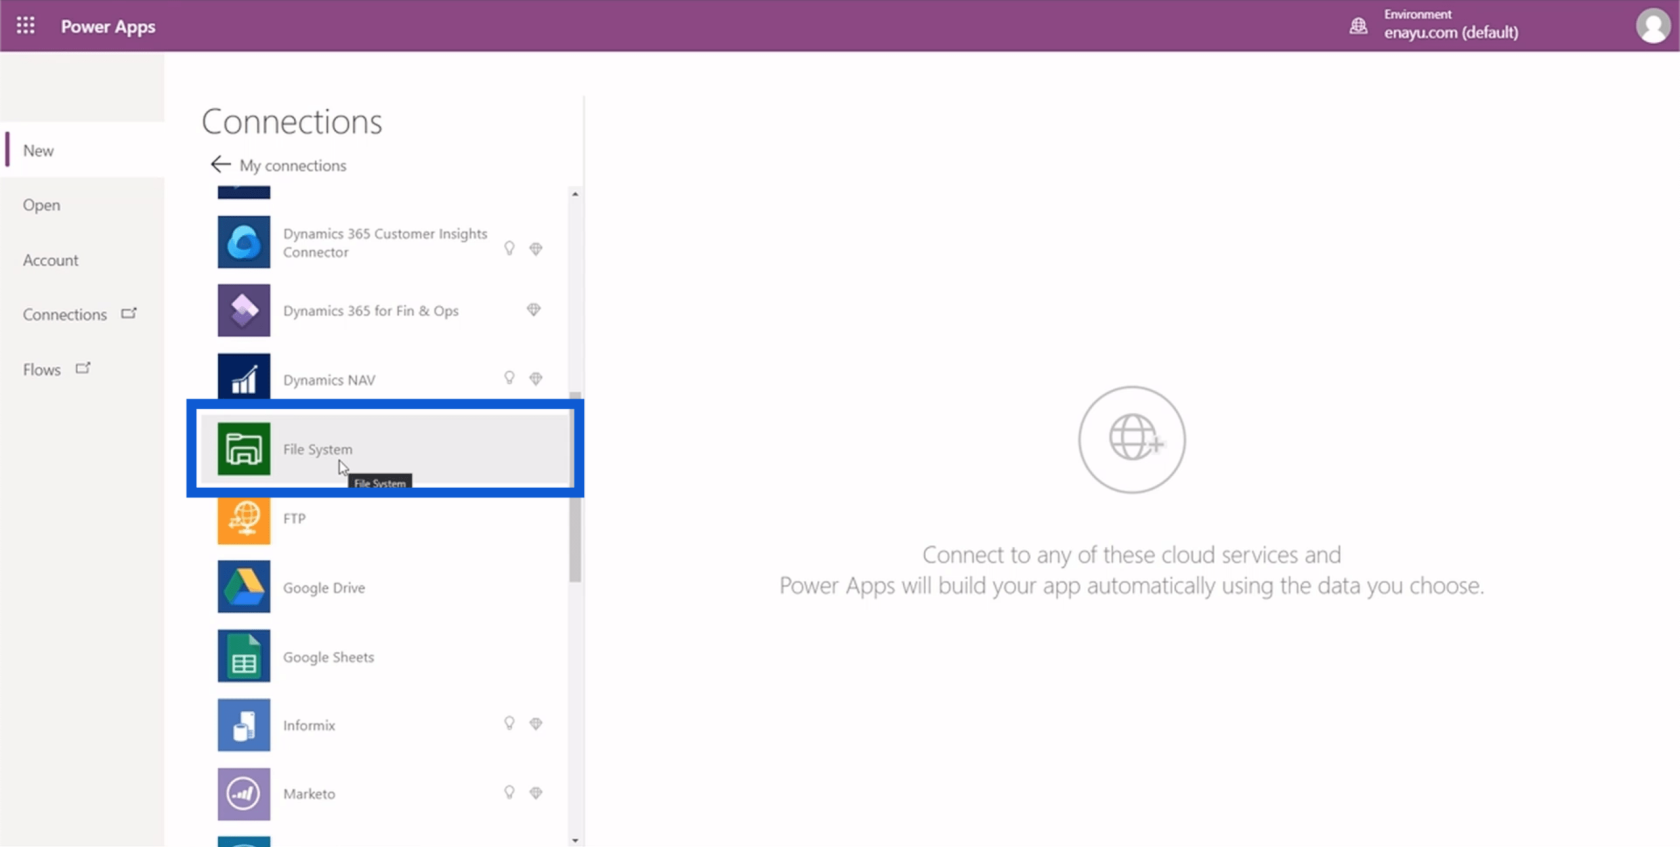 Configuración del entorno de Power Apps: Conéctese a OneDrive y Google Drive